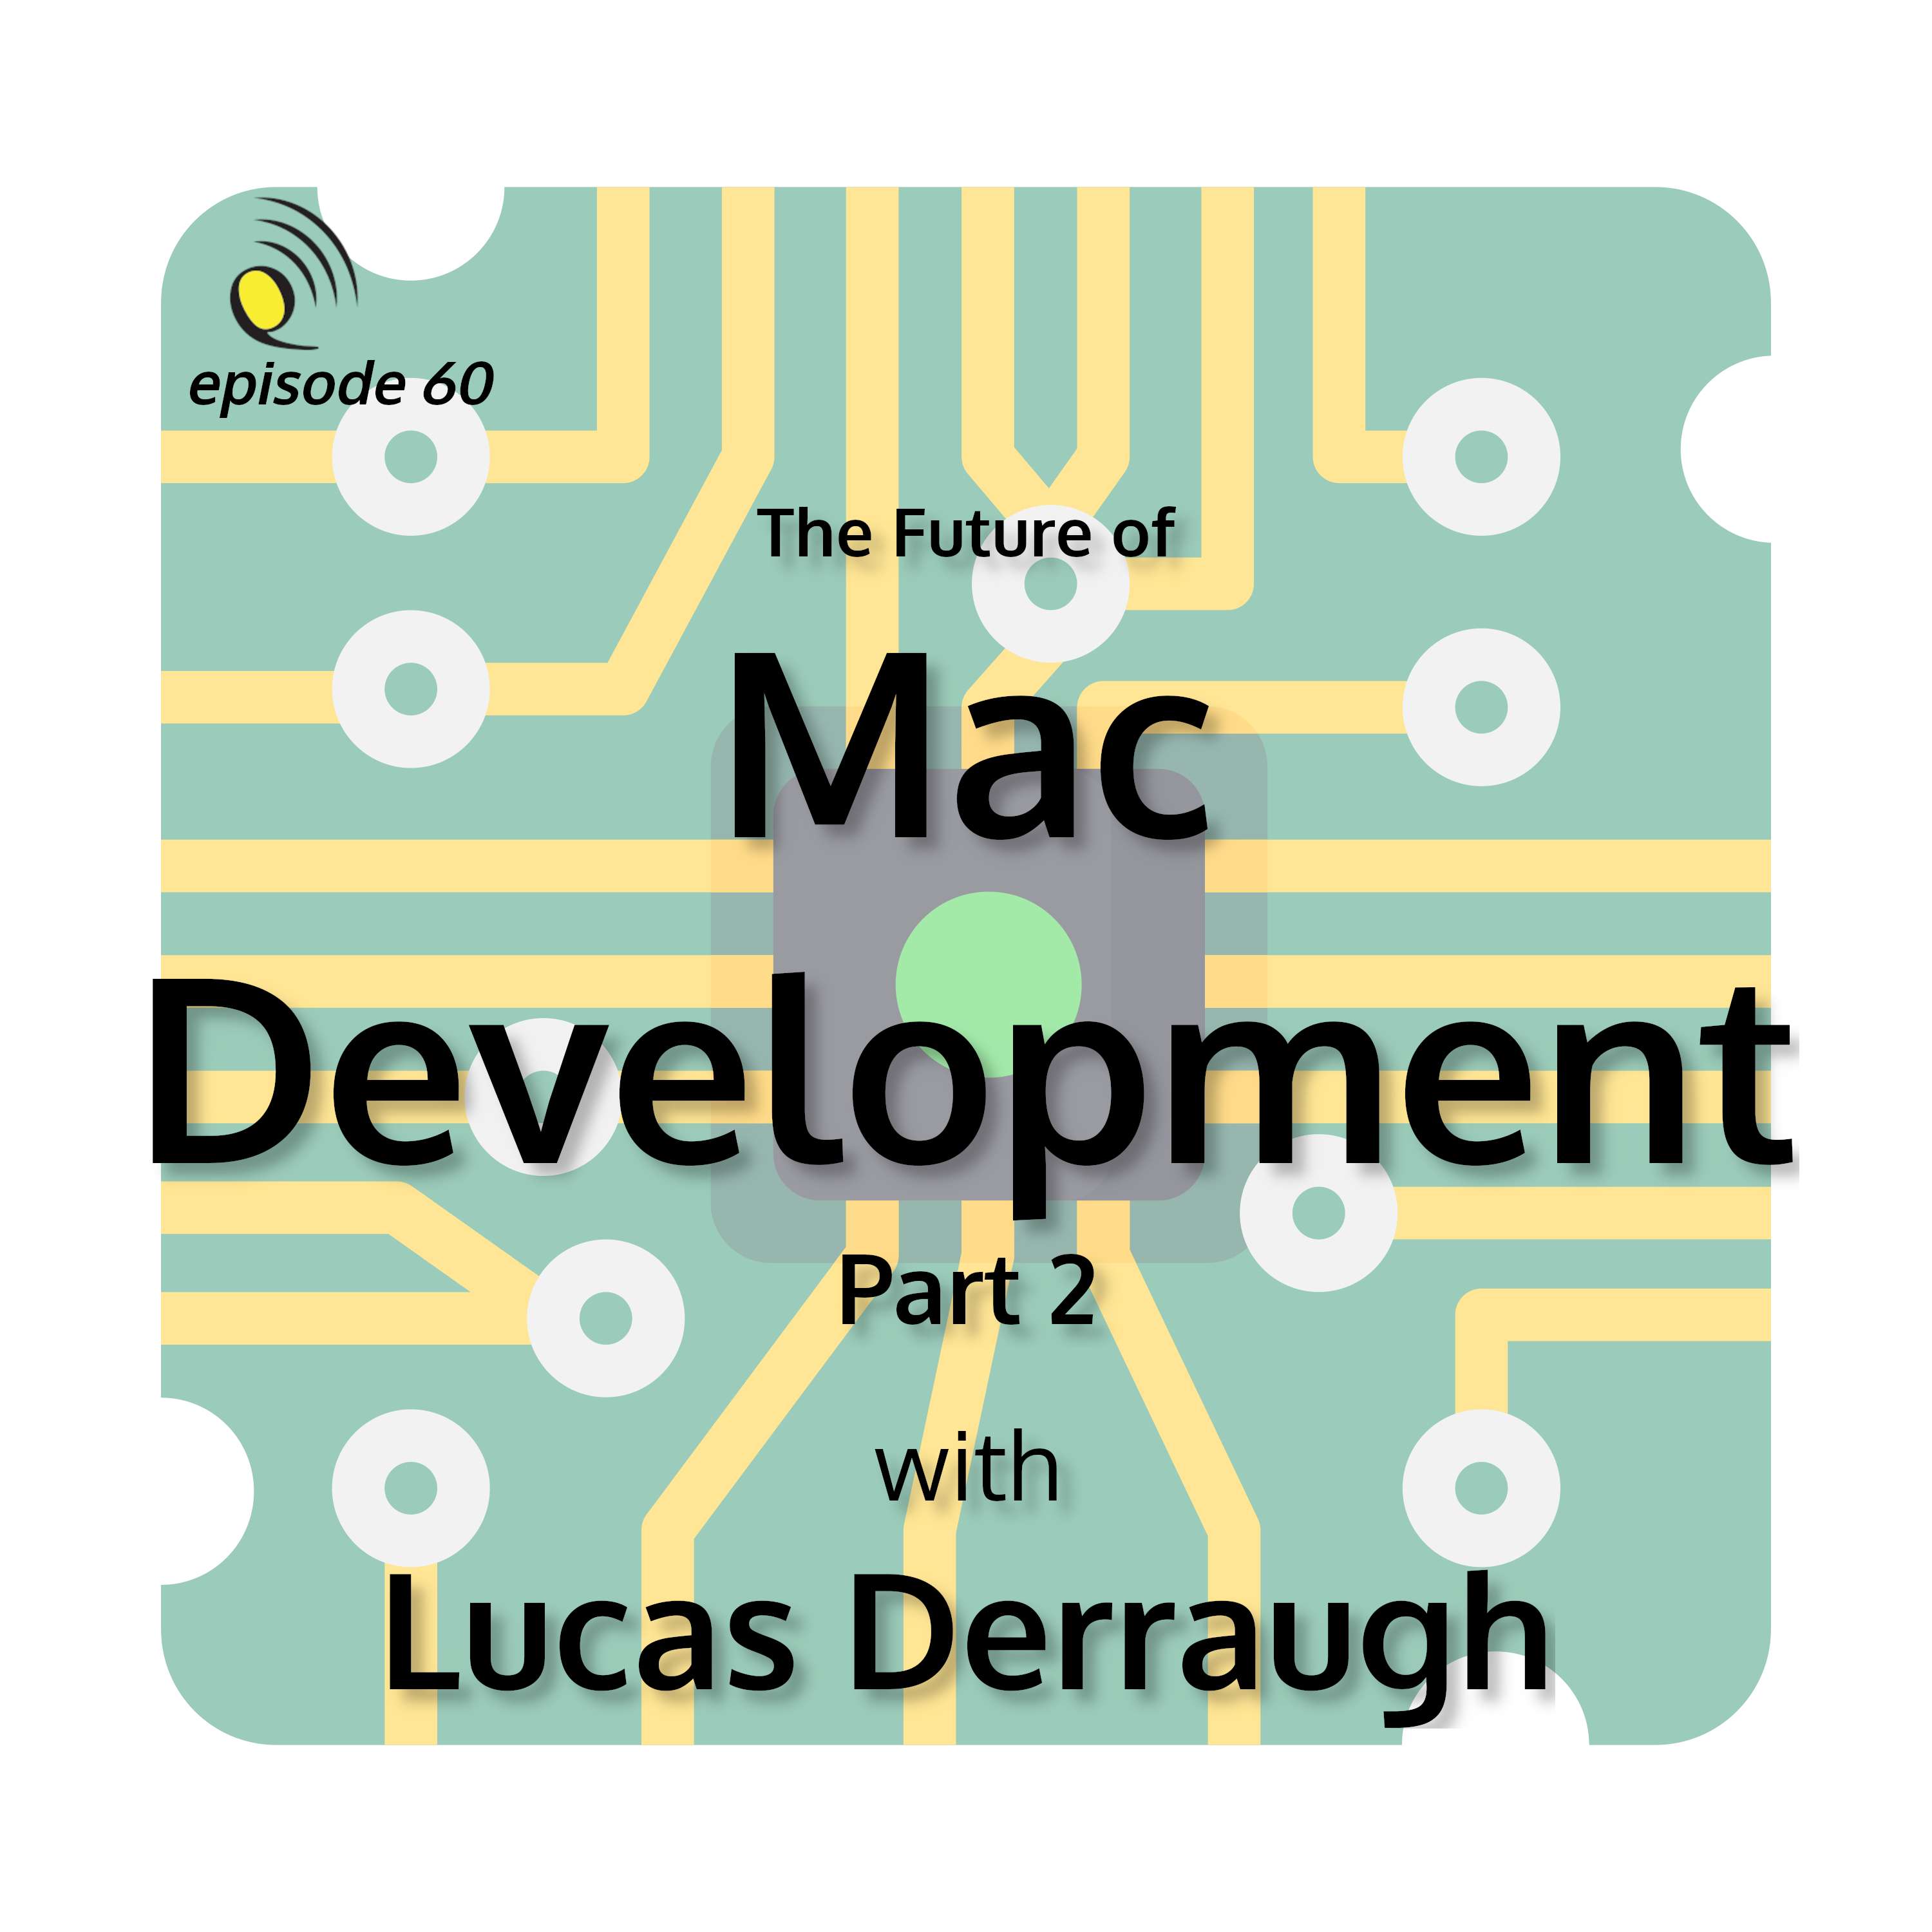 The Future of Mac Development with Lucas Derraugh - Part 2